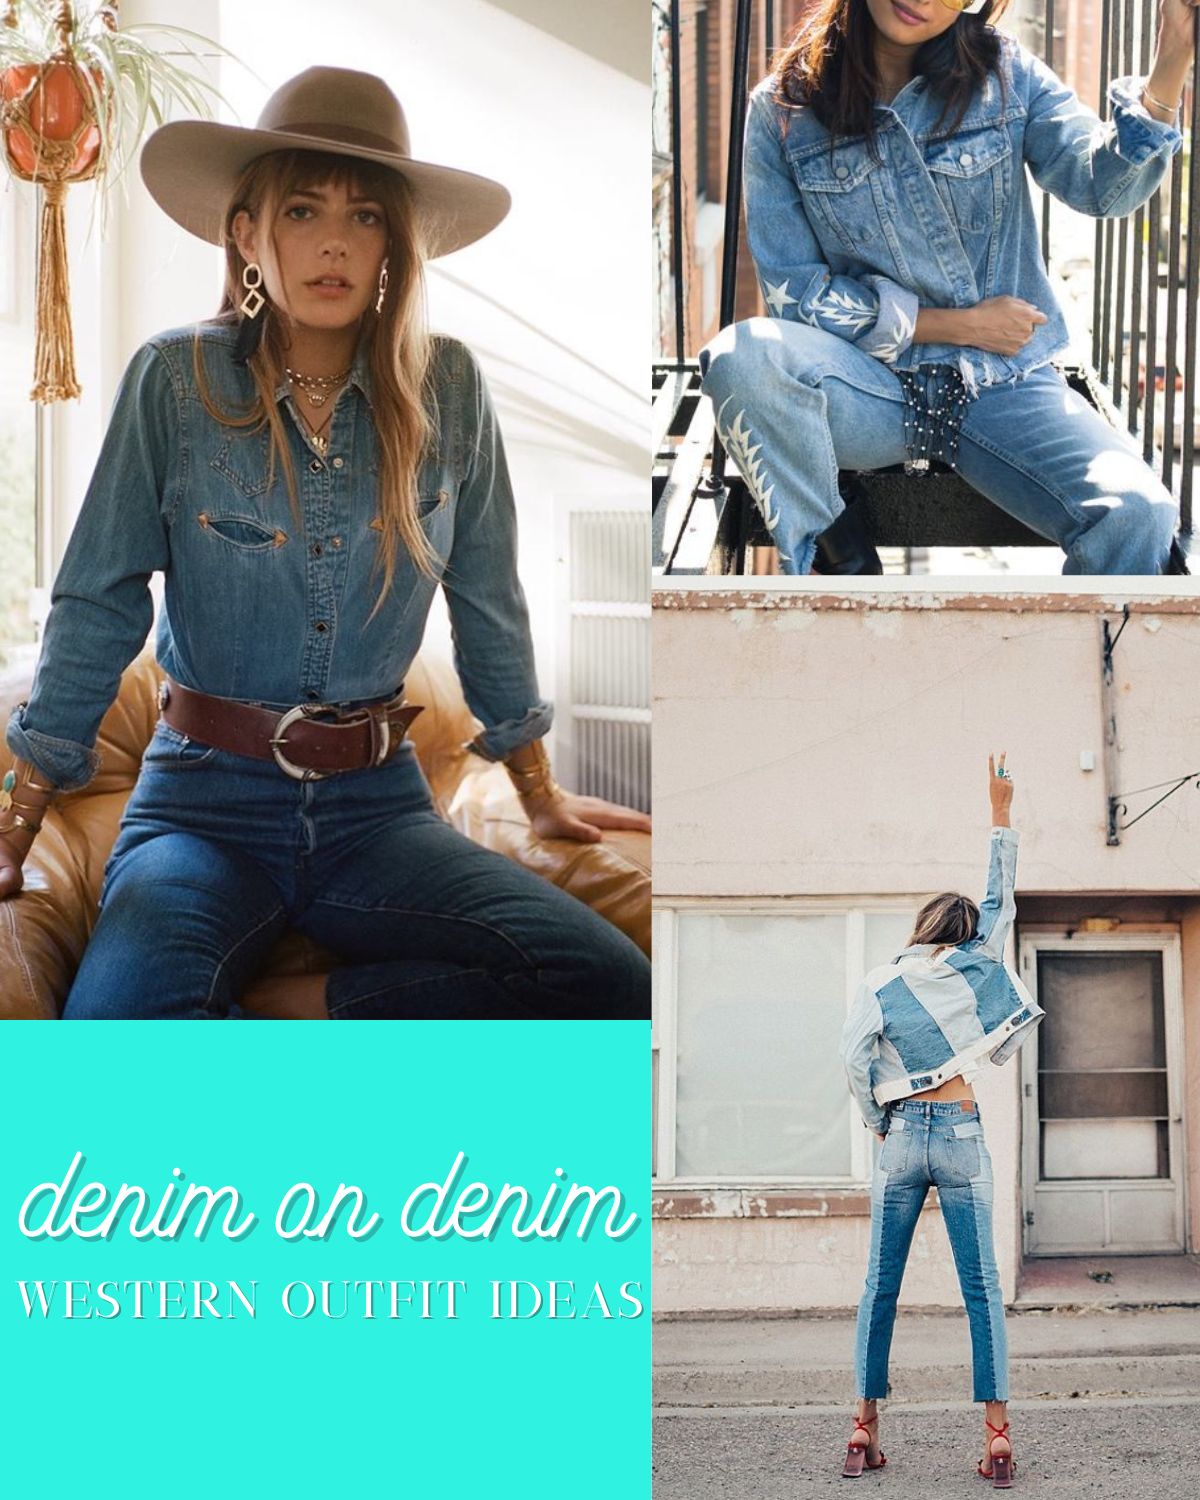 Three denim on denim rodeo outfits